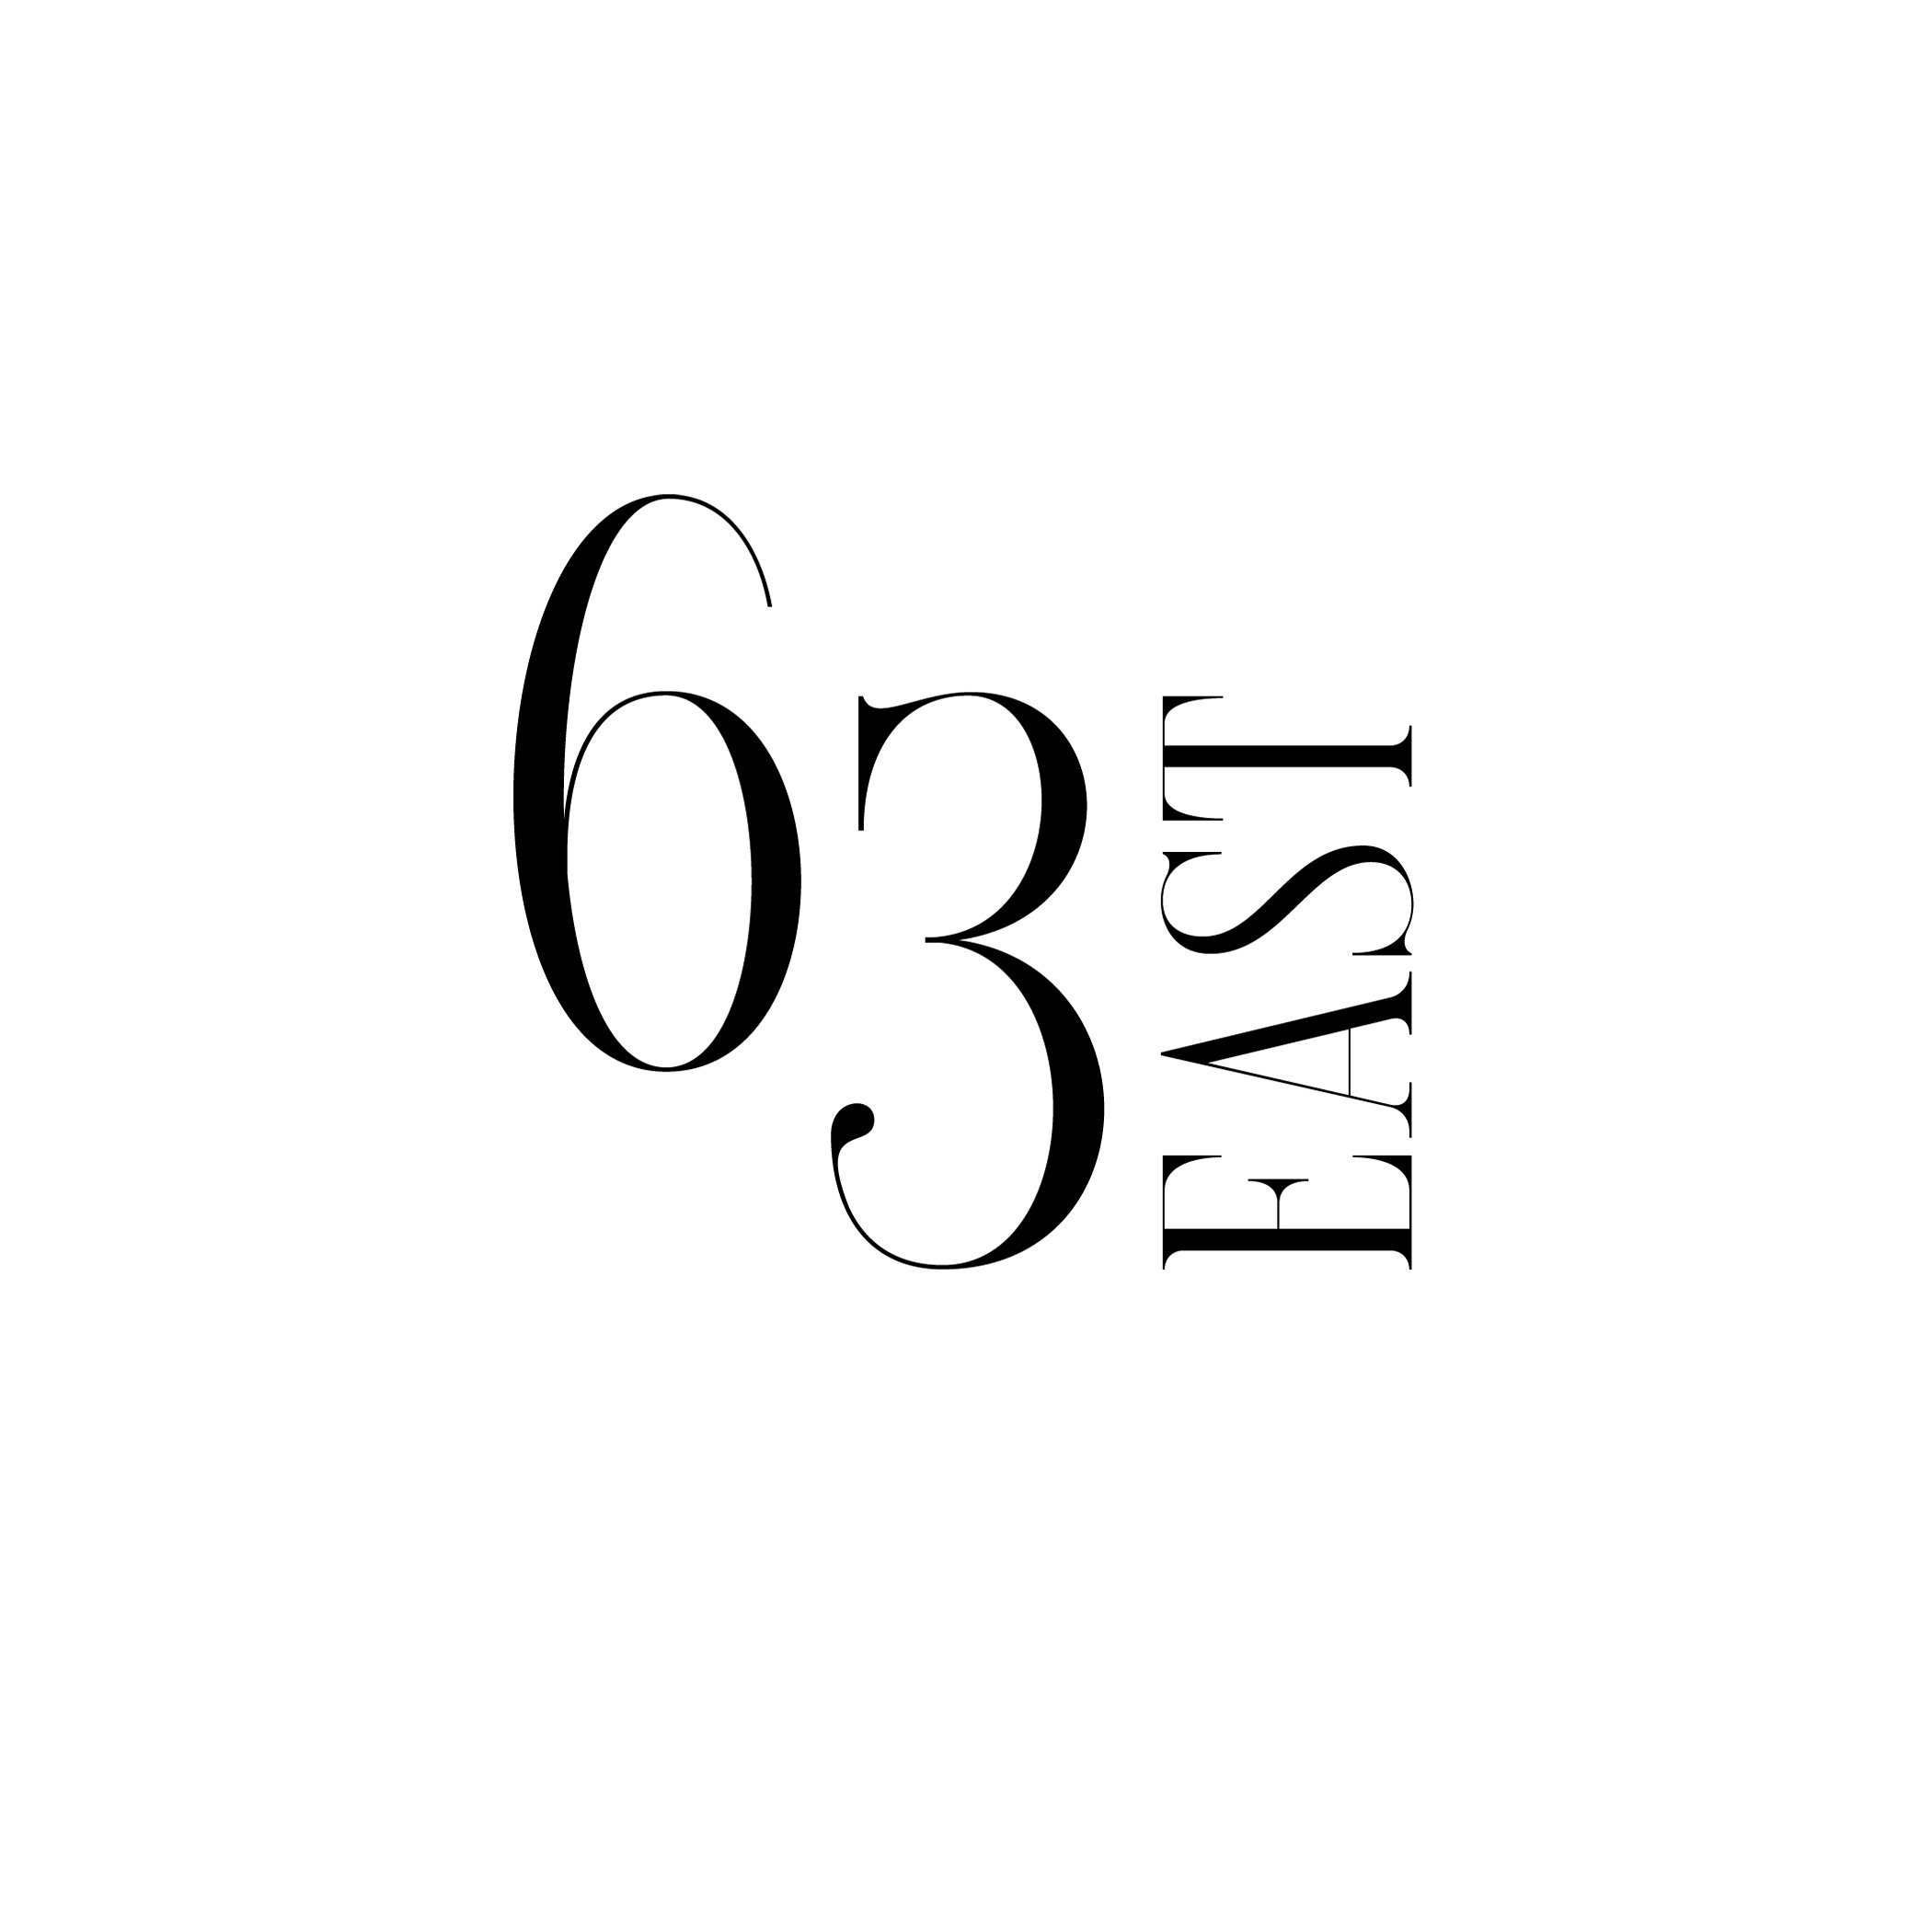 63EAST logo.png